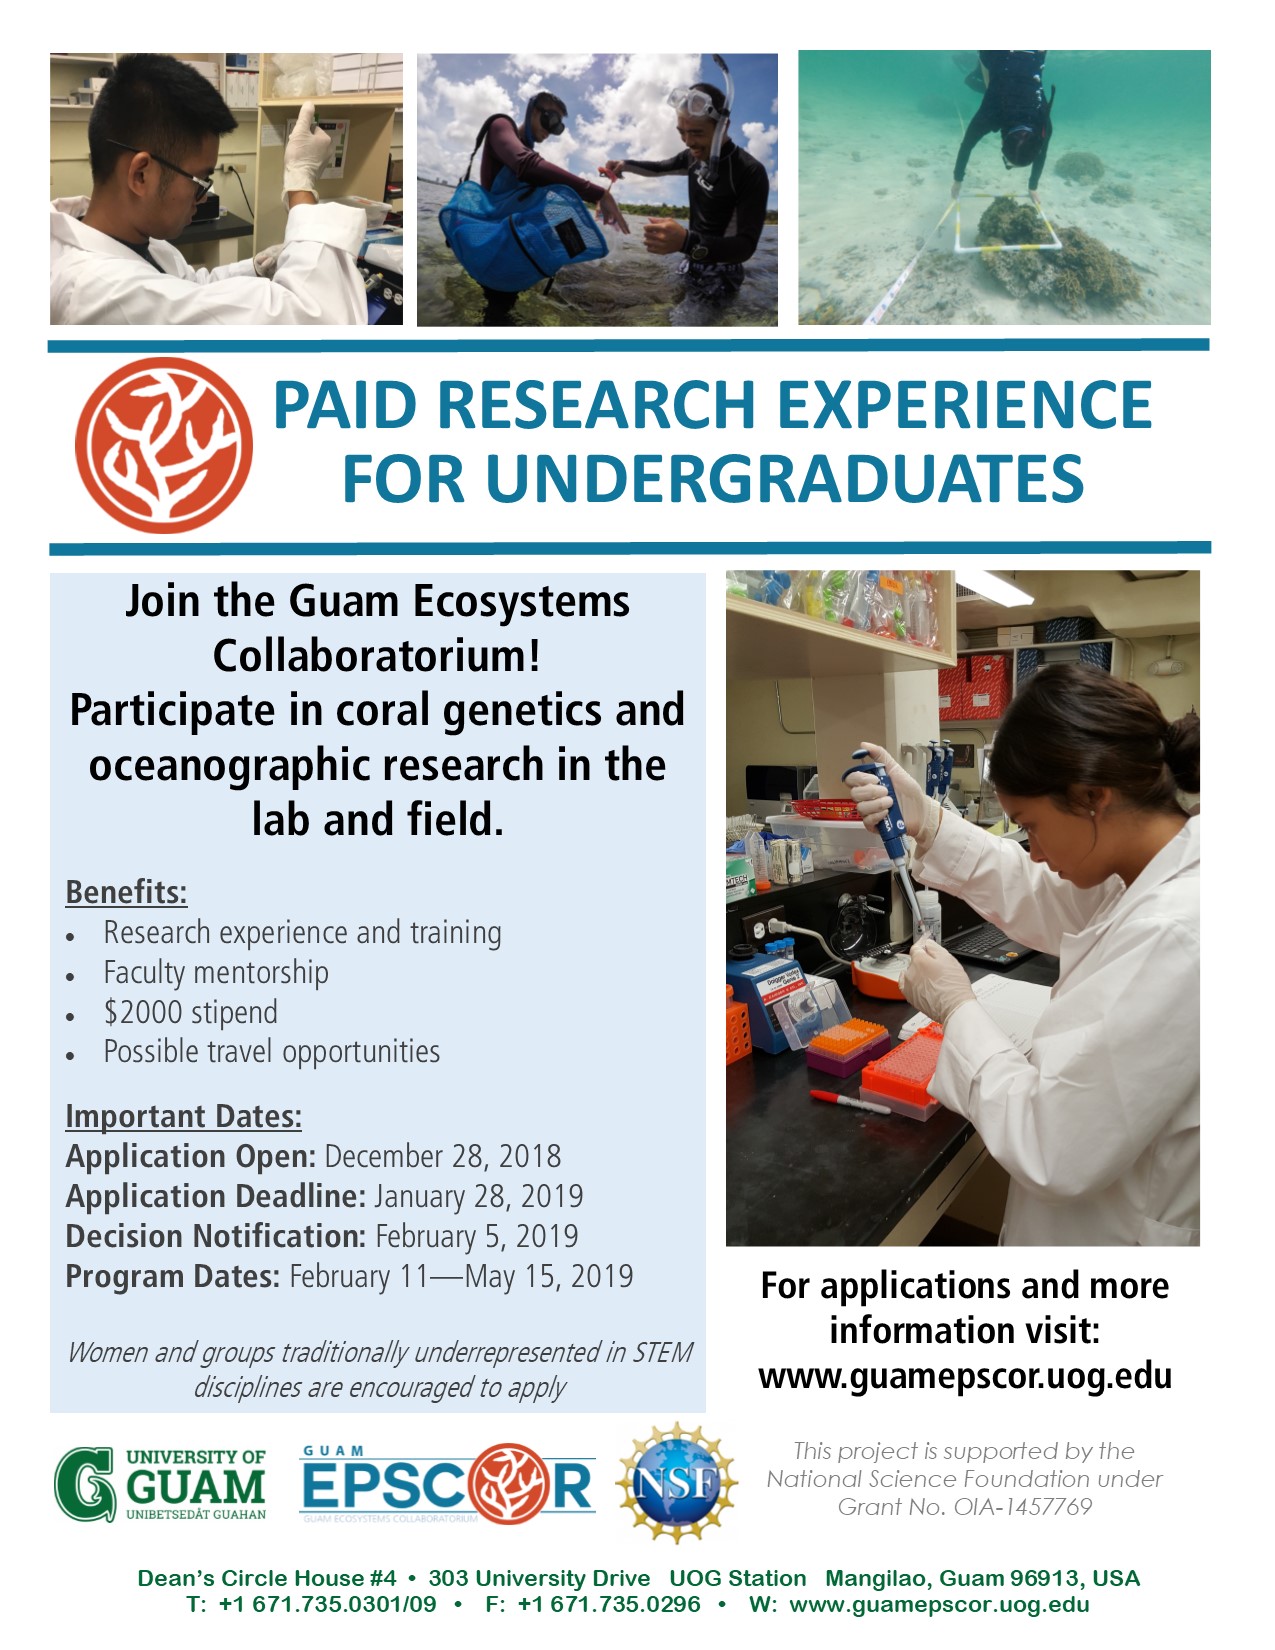 Guam EPSCoR's Student Research Experience Program